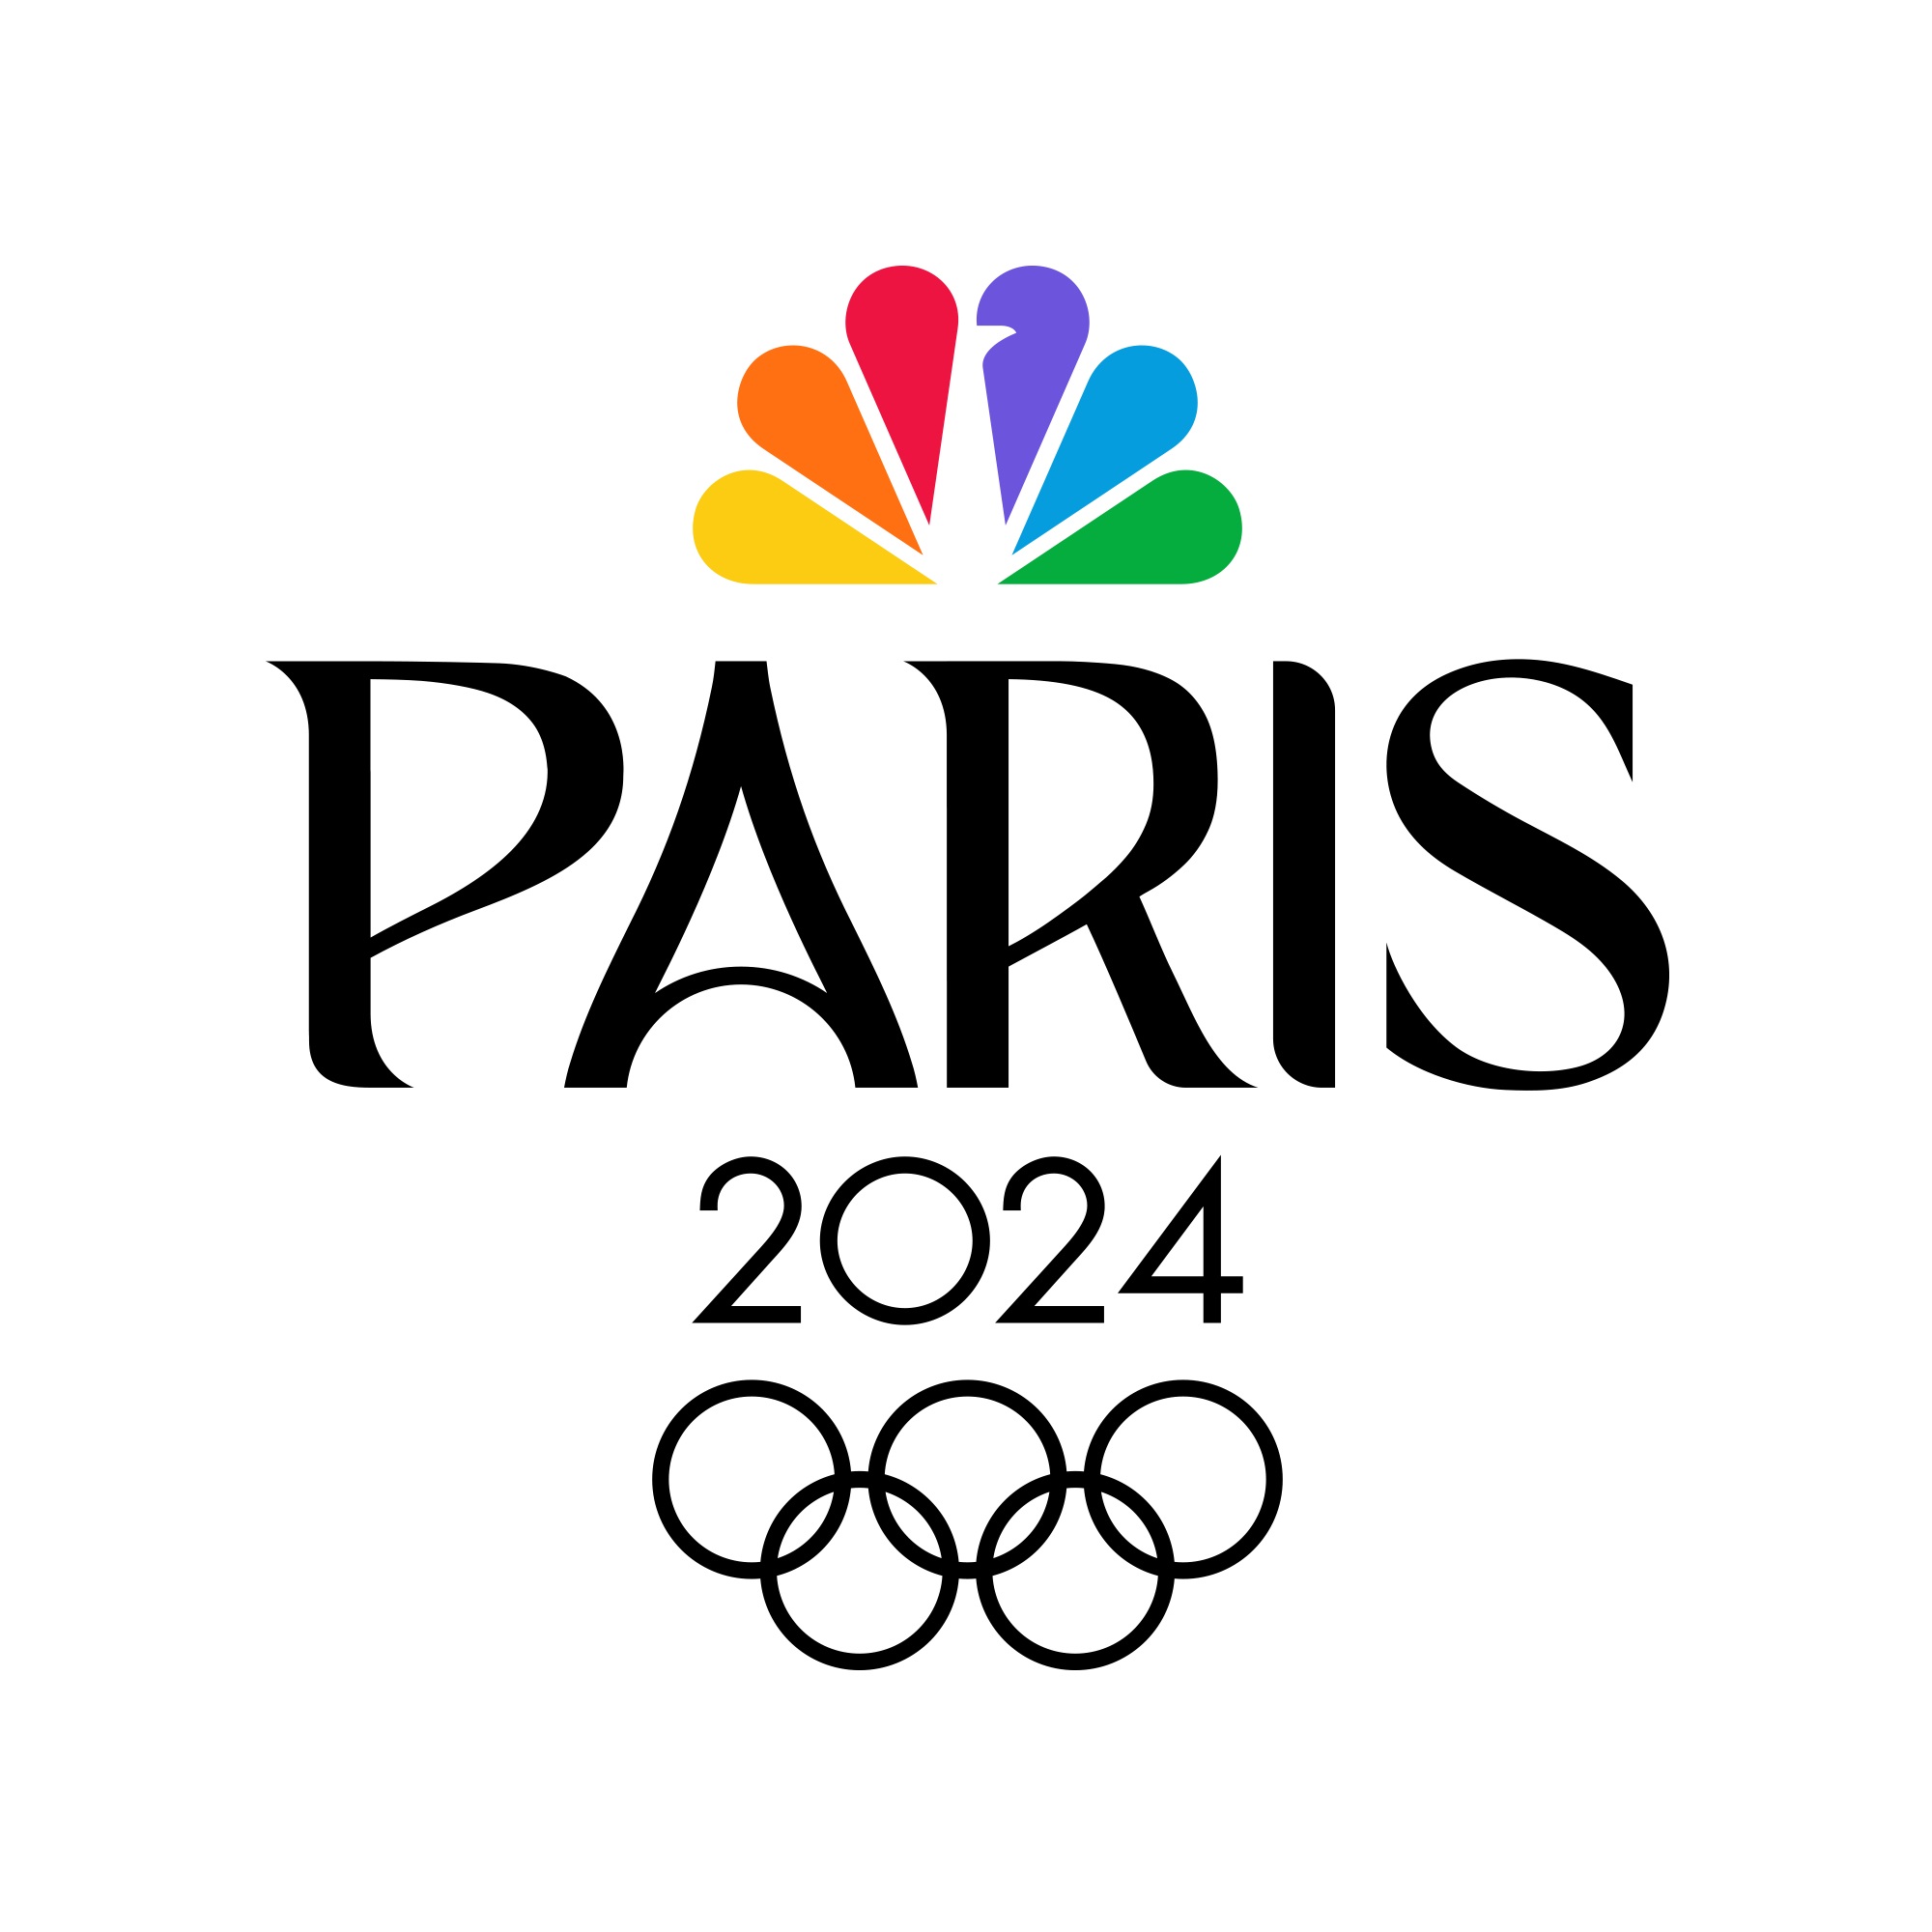 Olympics: USA Network, CNBC, and E! Hosts Named for Paris 2024